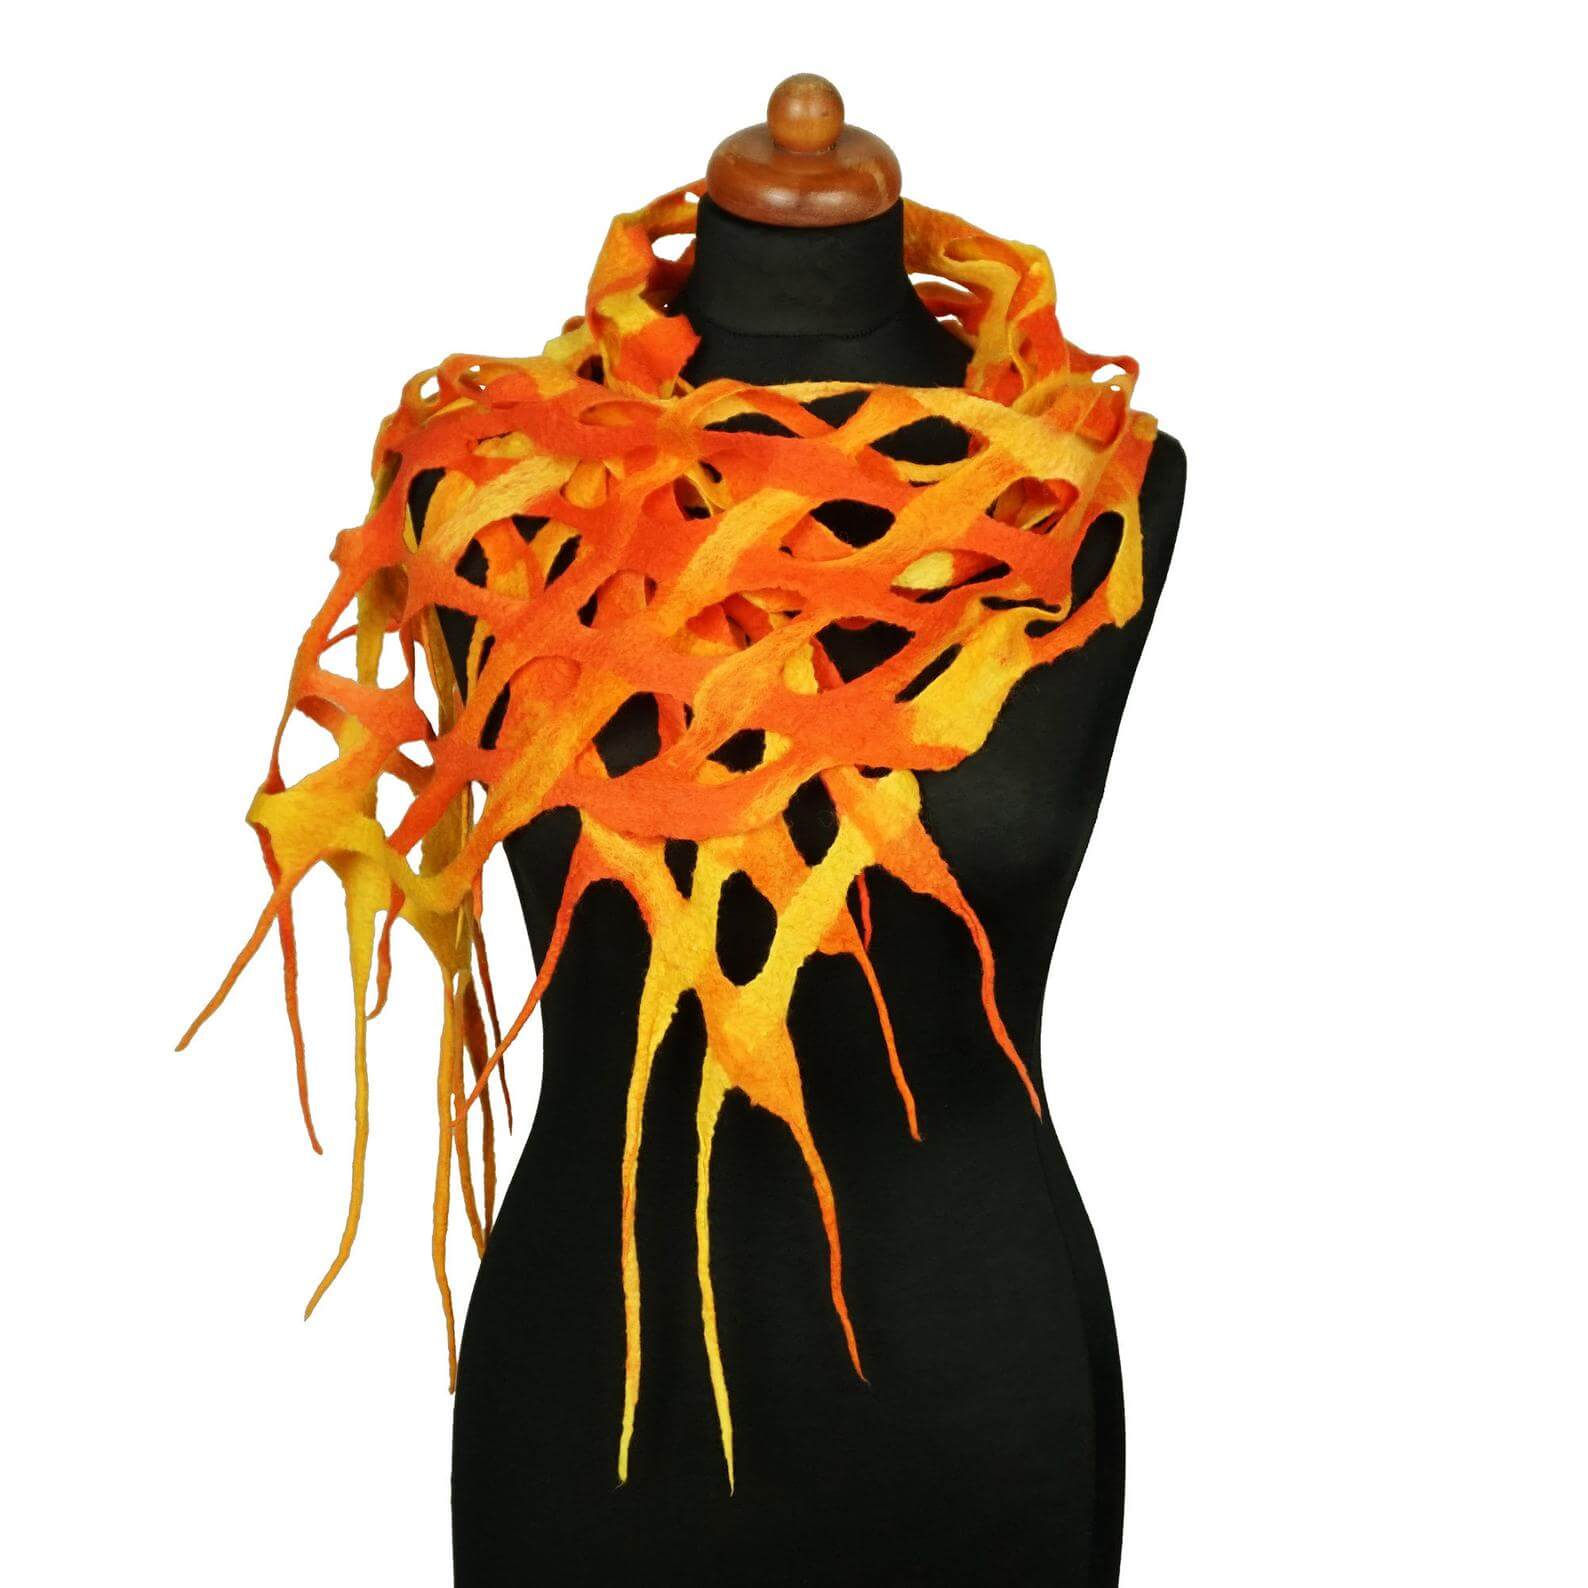 openwork felt shawl yellow and orange scarf